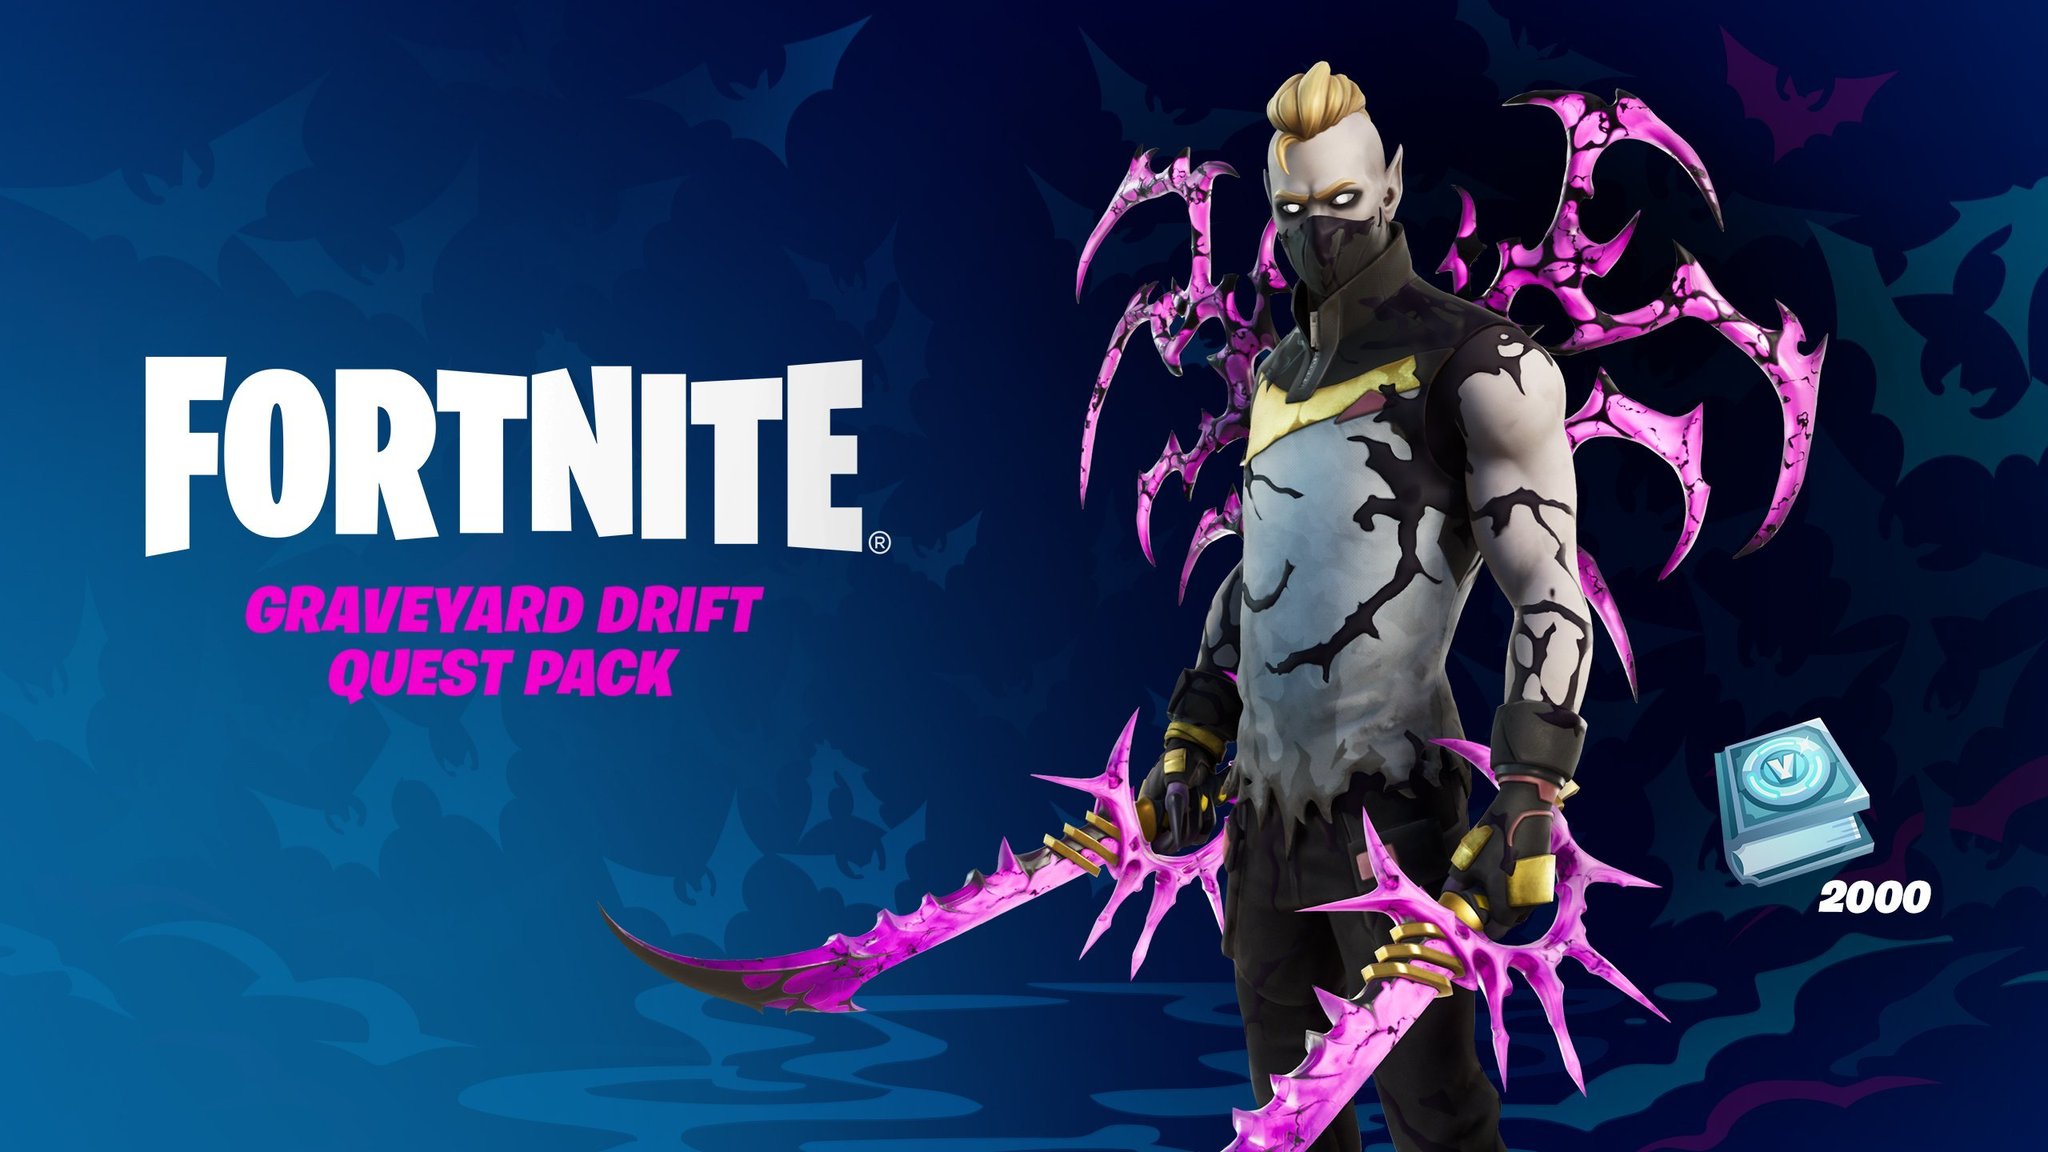 Graveyard Drift bundle is coming to Fortnite  